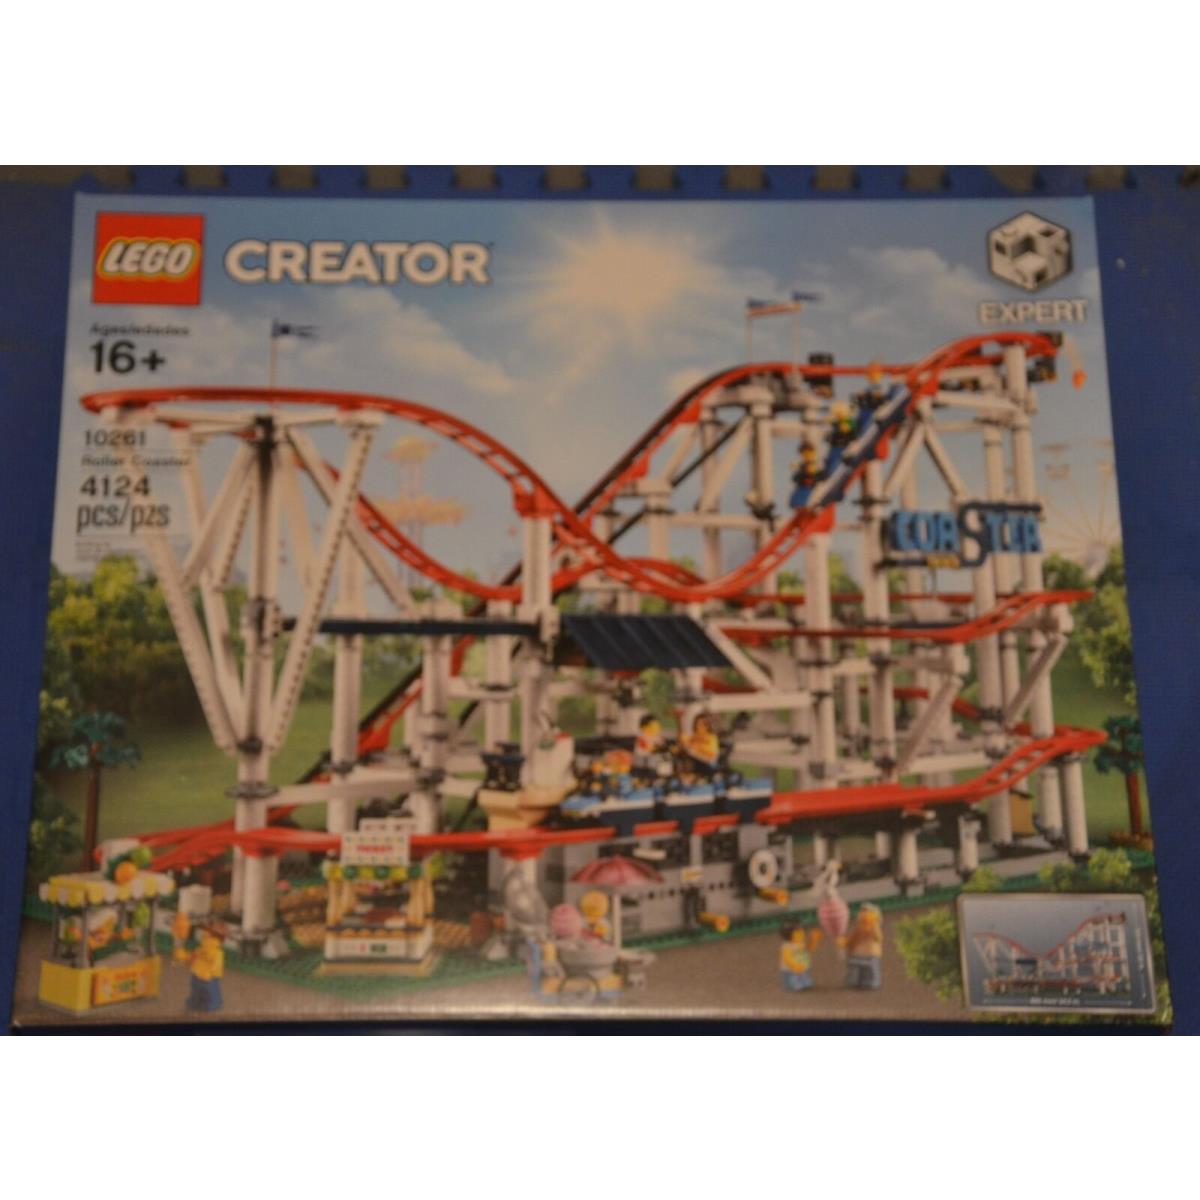 Lego 10261 Roller Coaster Set